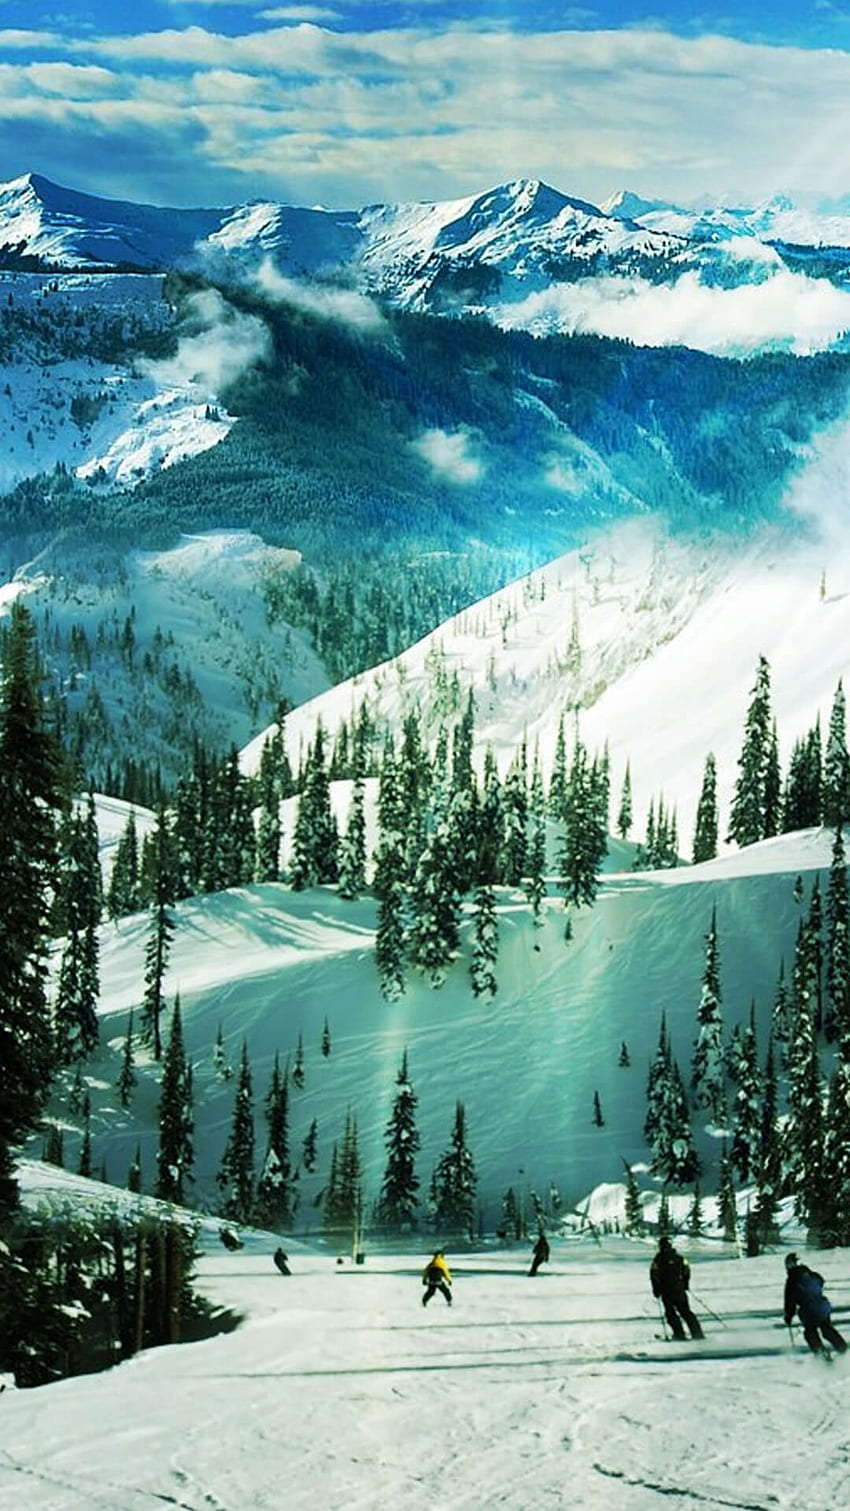 Ski Slope Paradise Winter Landscape iPhone 6 Plus - iPhone HD phone wallpaper